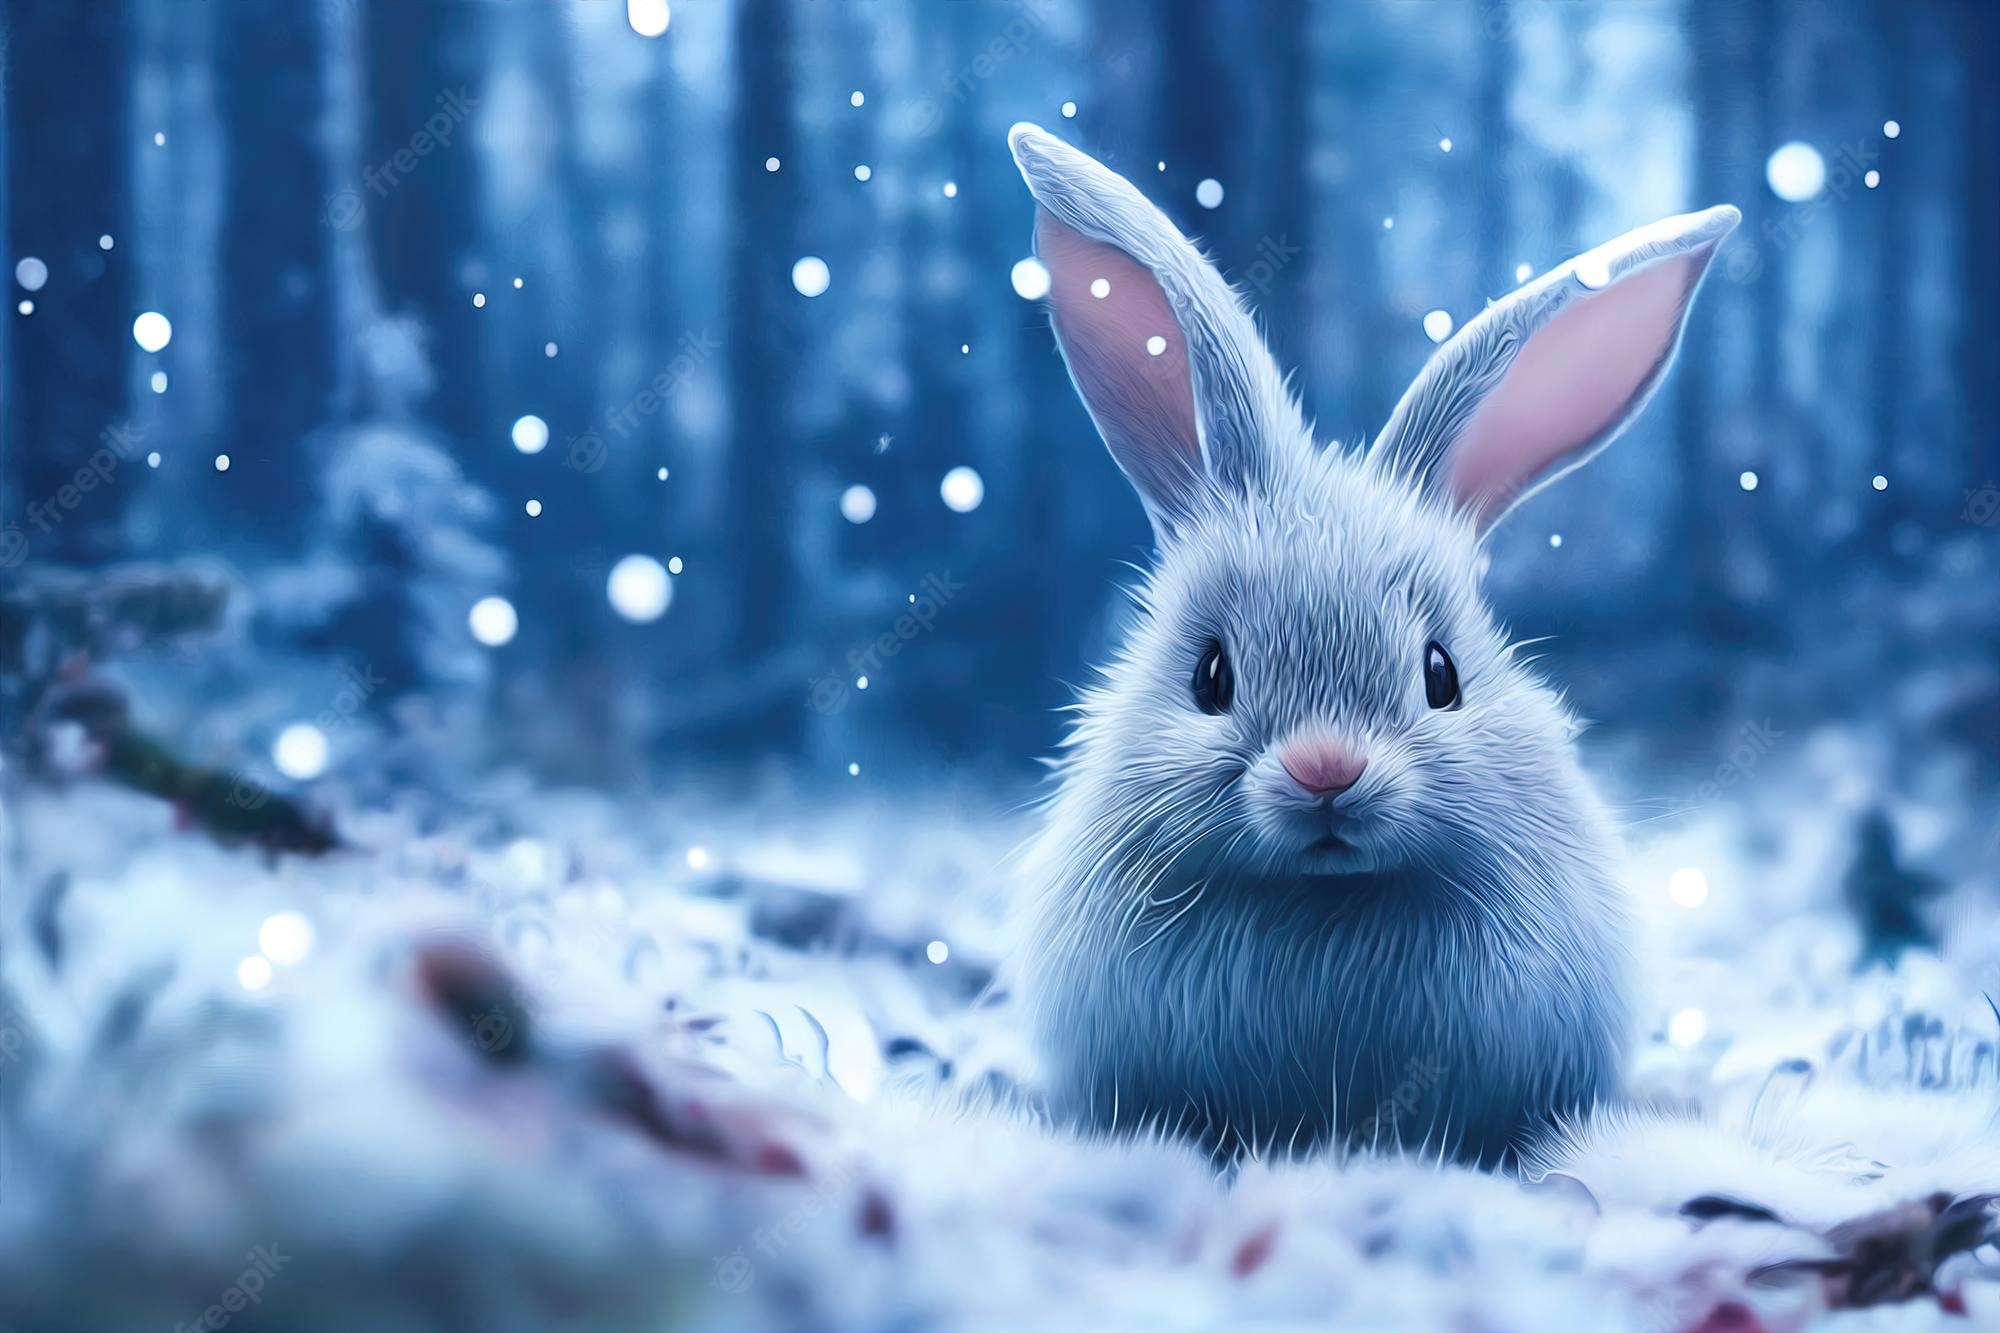 Winter bunny Image. Free Vectors, & PSD